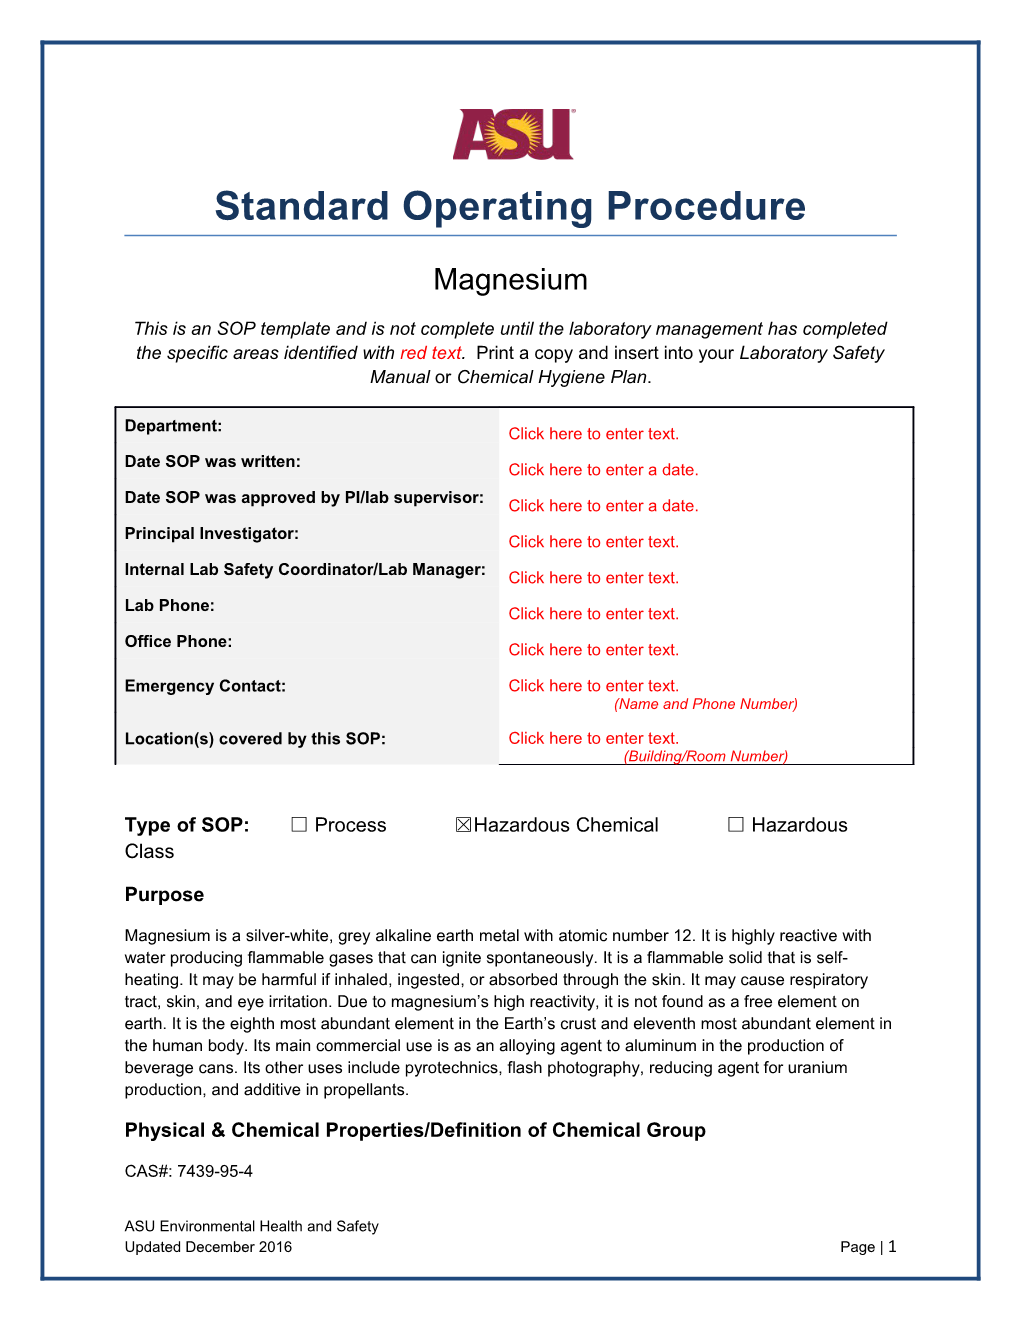 Type of SOP: Process Hazardous Chemical Hazardous Class s2